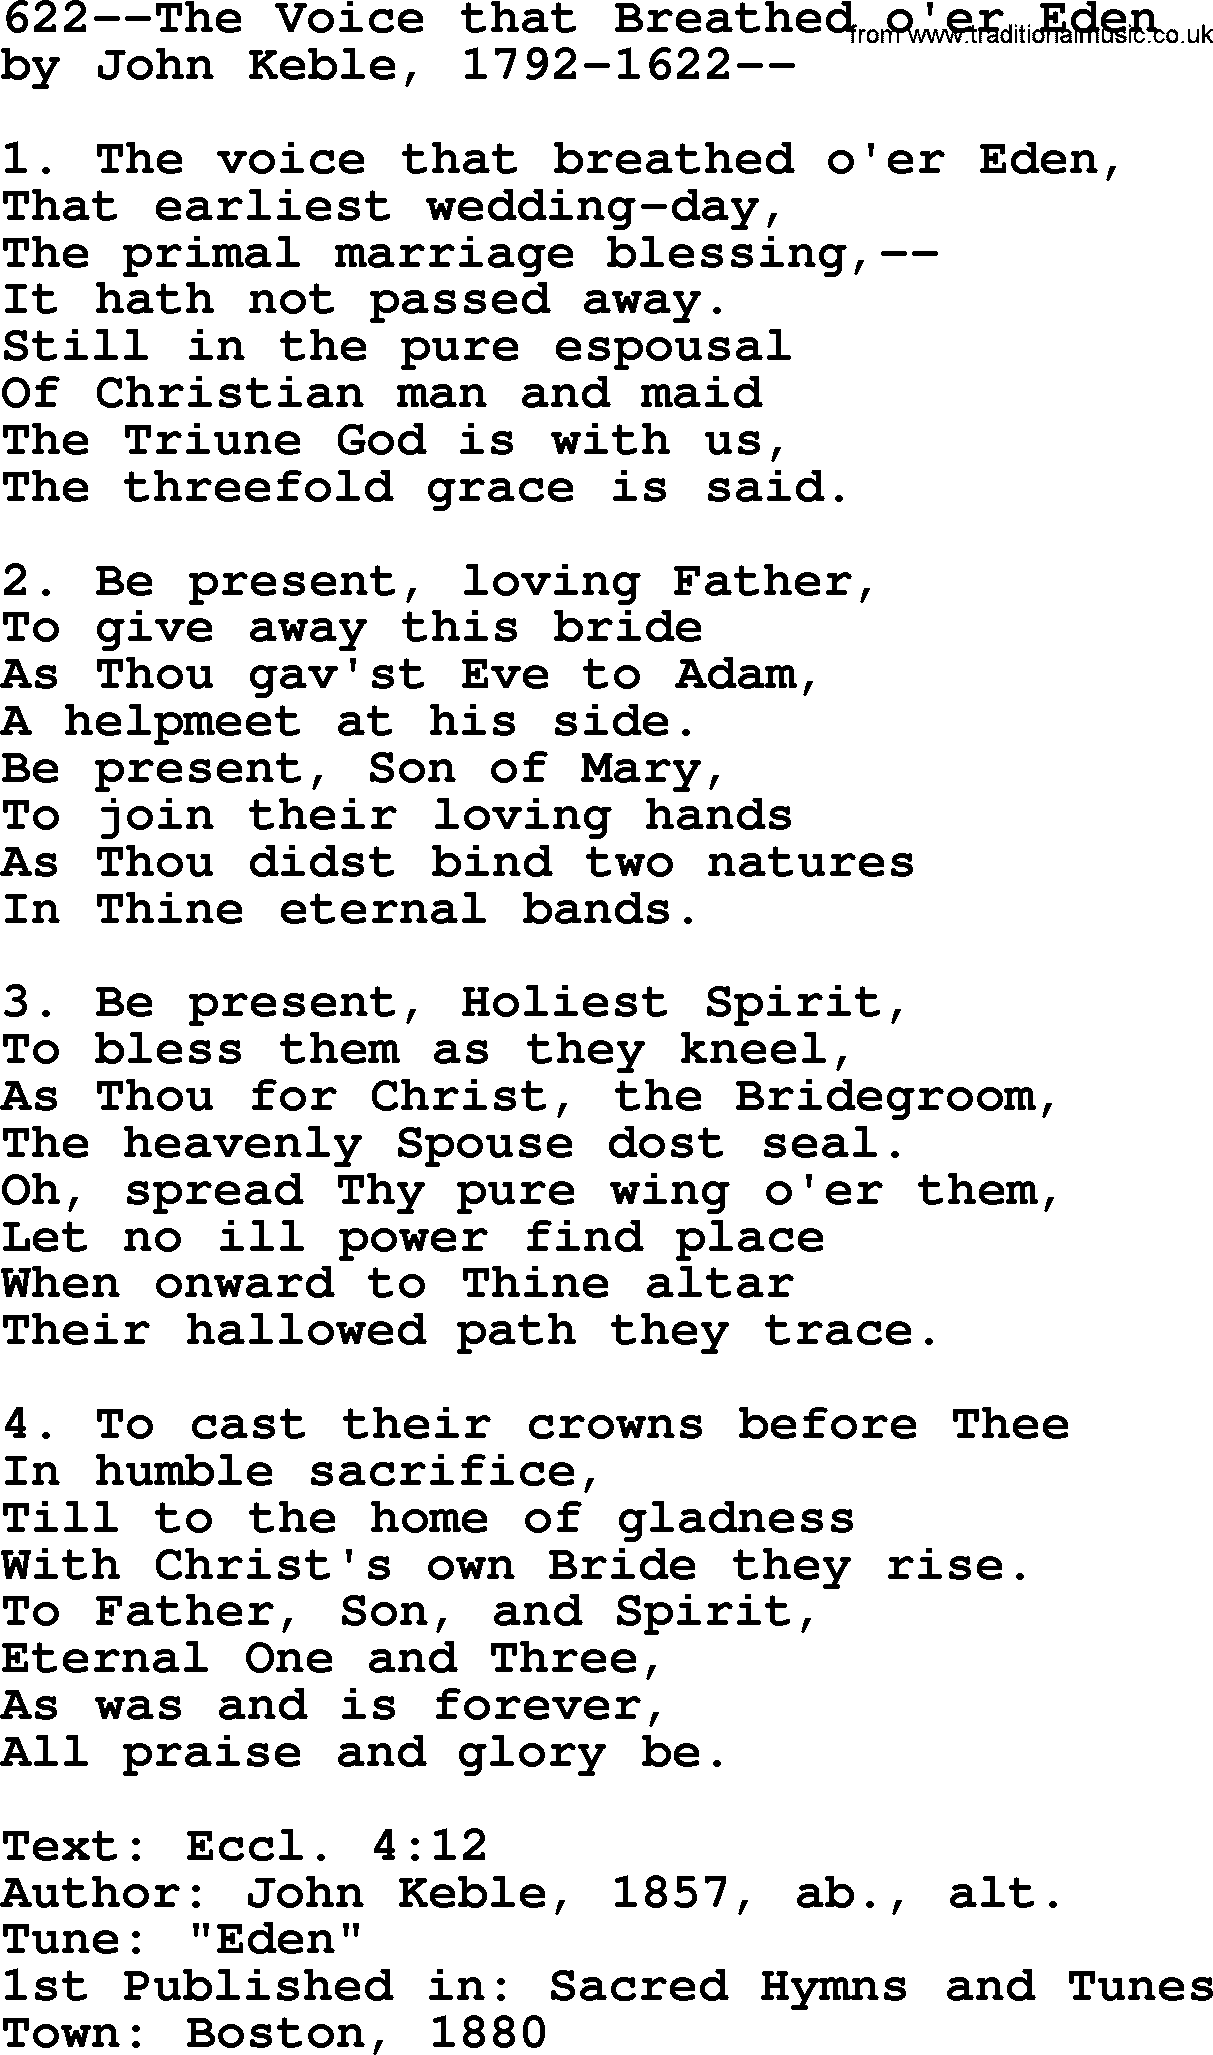 Lutheran Hymn: 622--The Voice that Breathed o'er Eden.txt lyrics with PDF